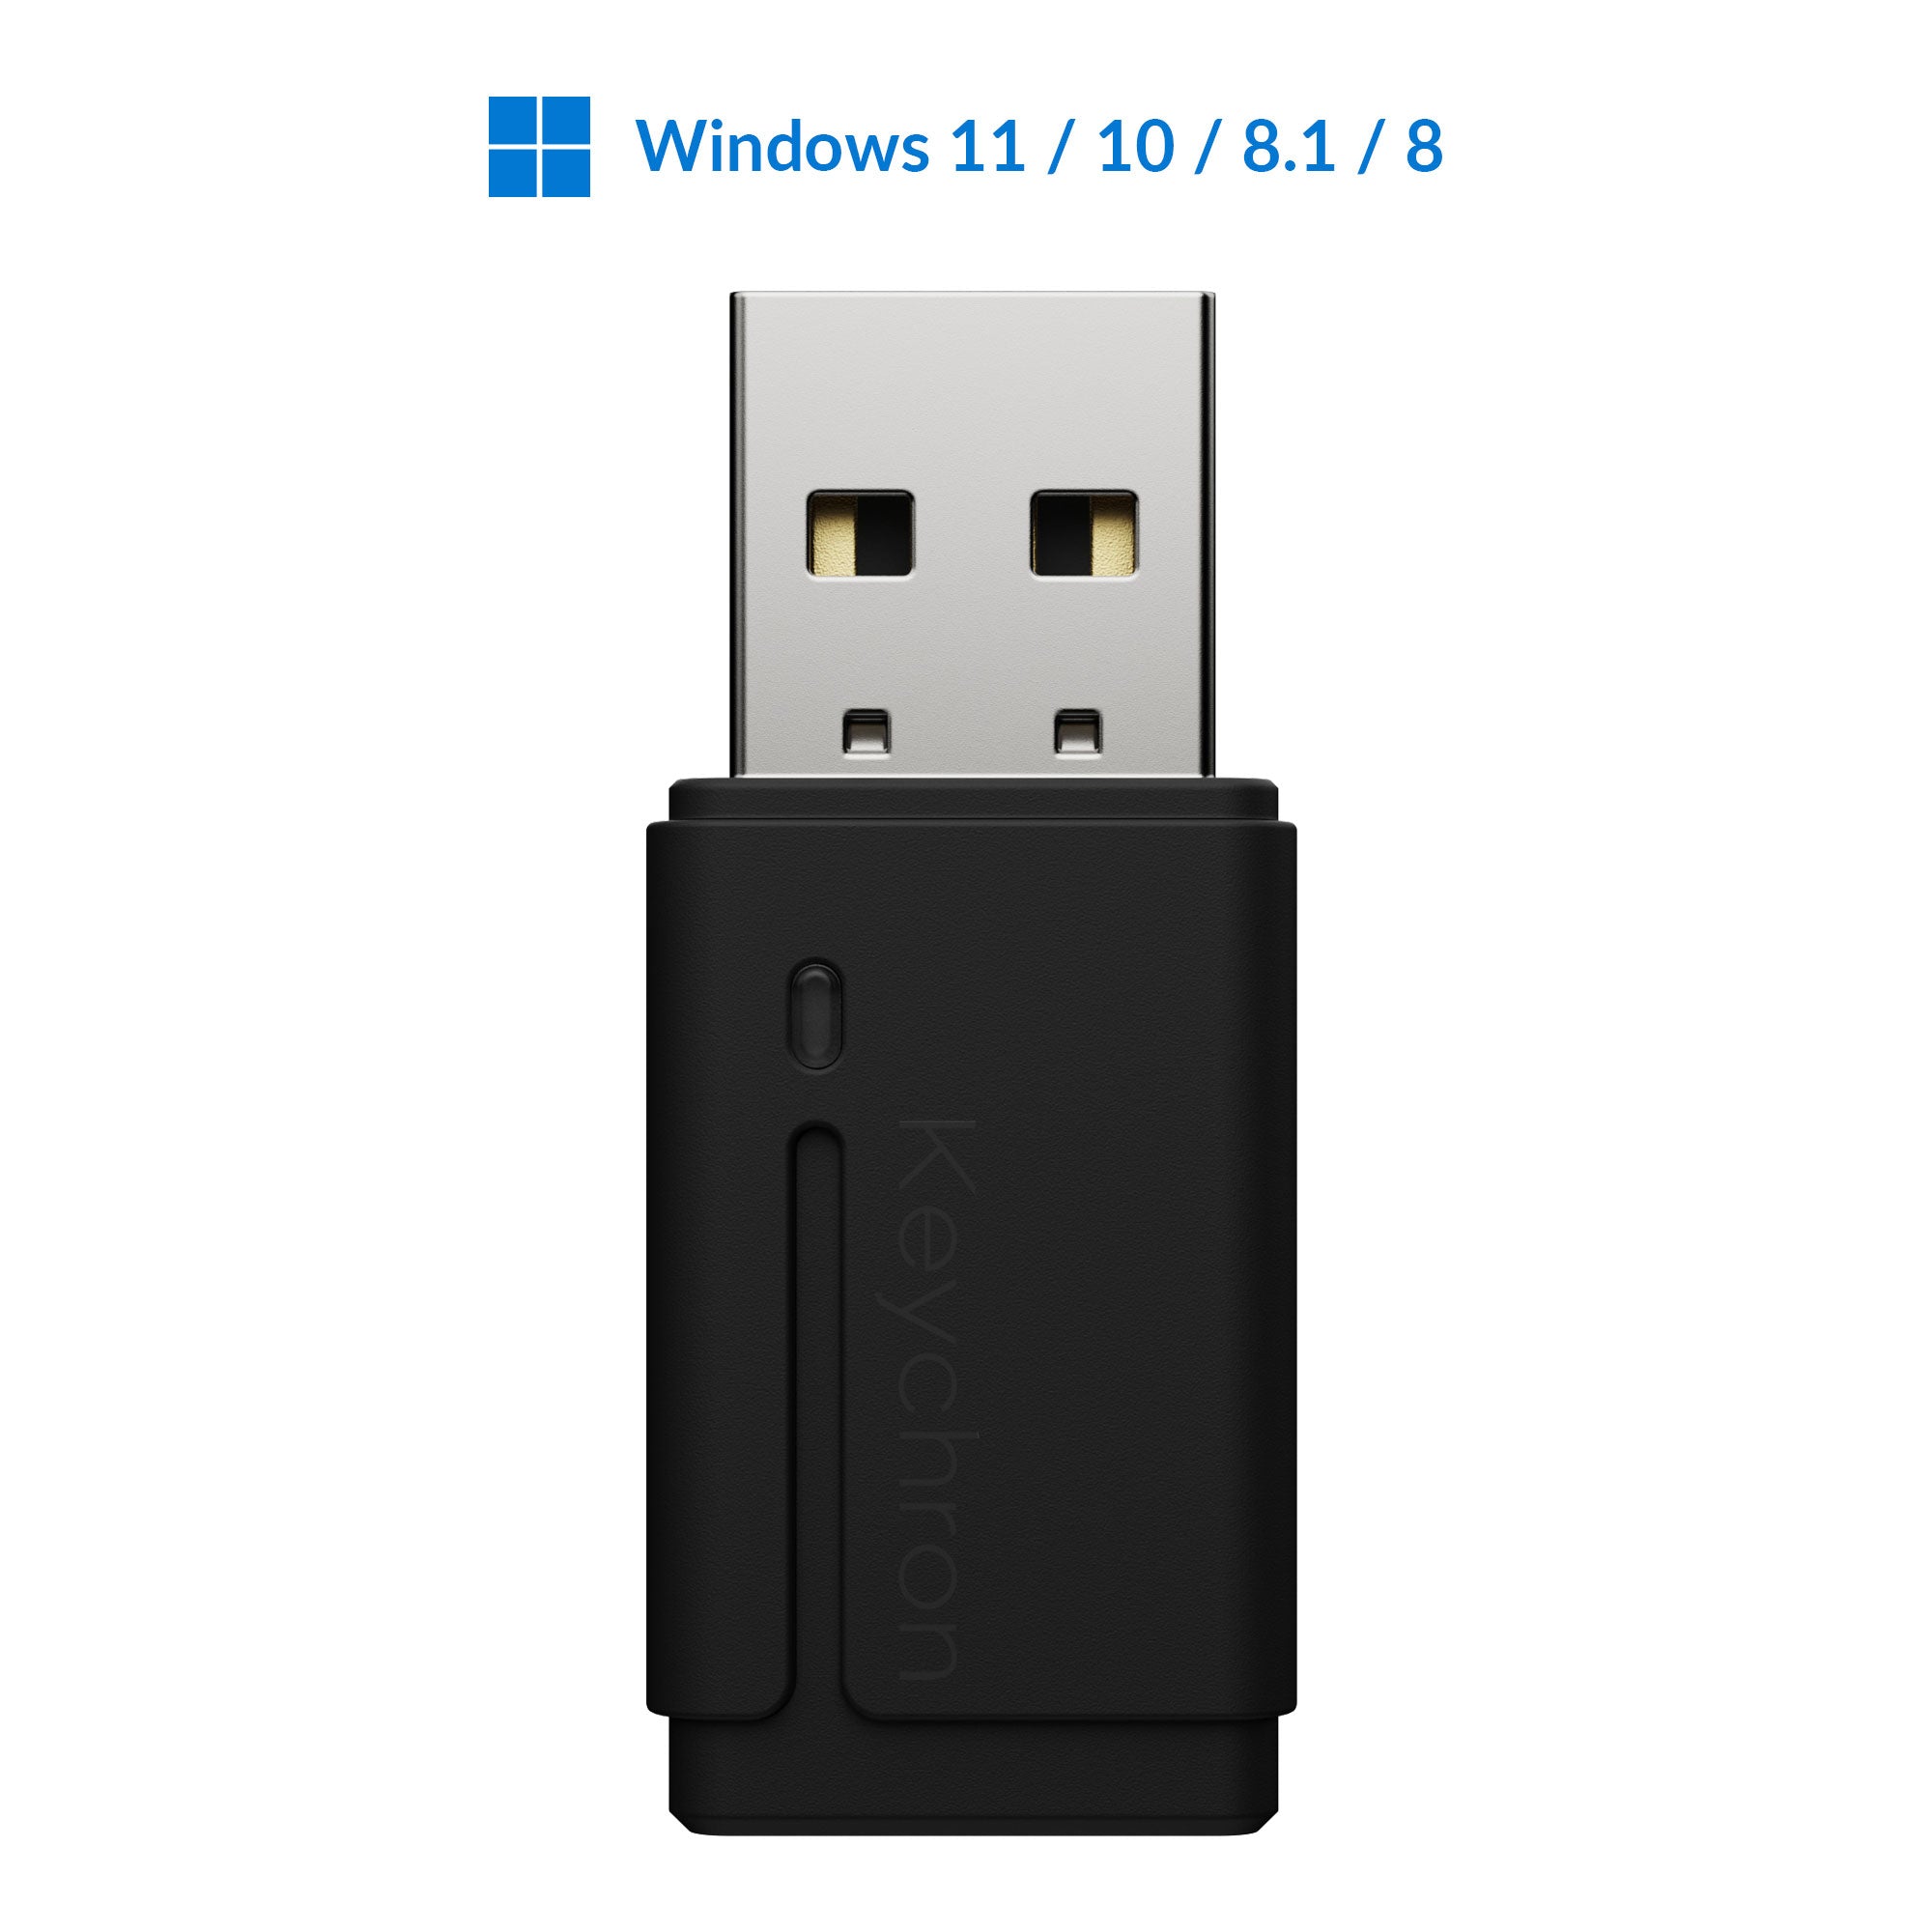 USB Bluetooth Adapter for Windows PC